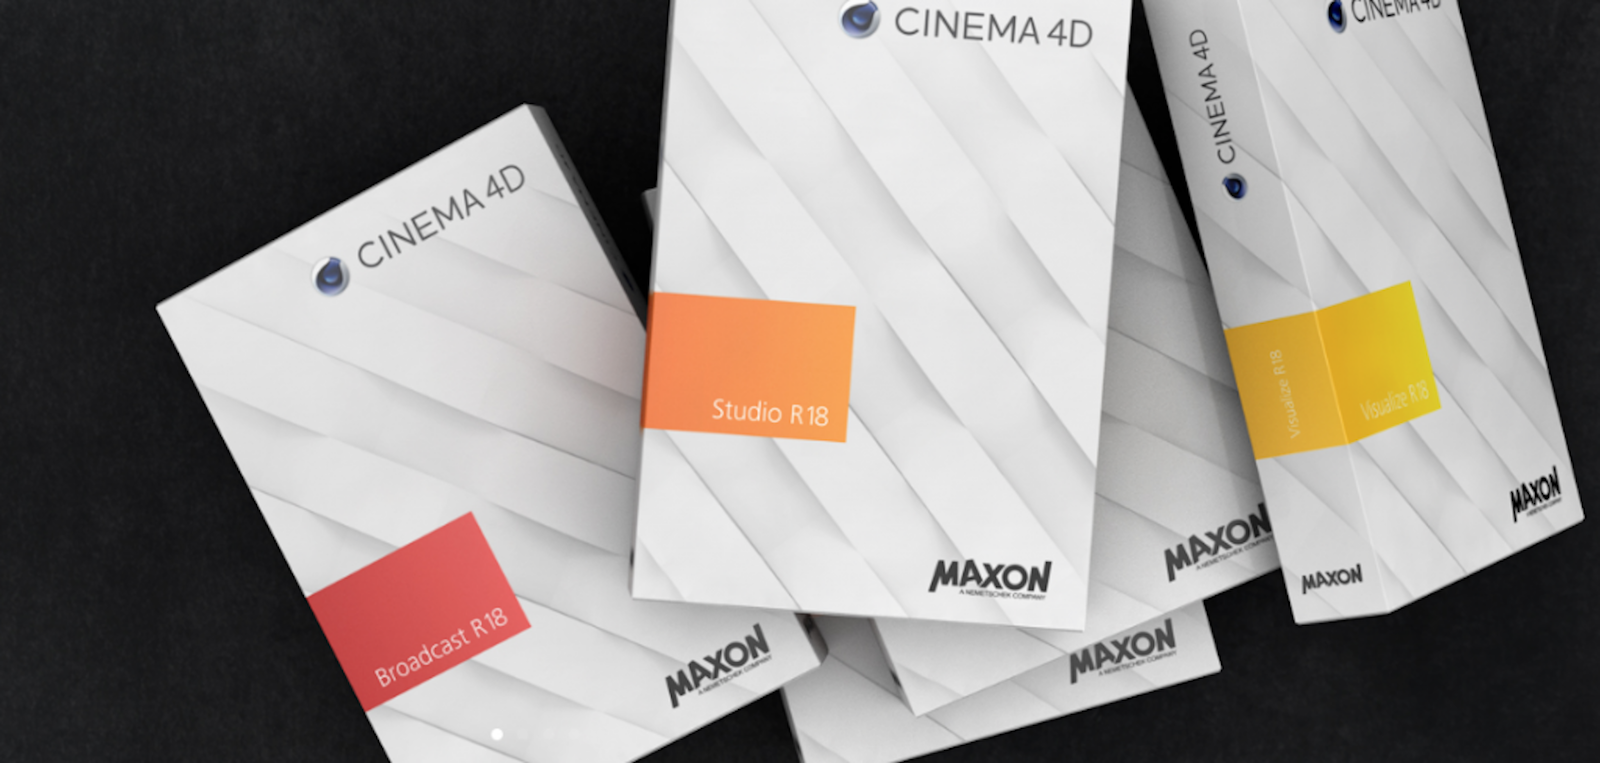 Cinema4D r.18 disponibile